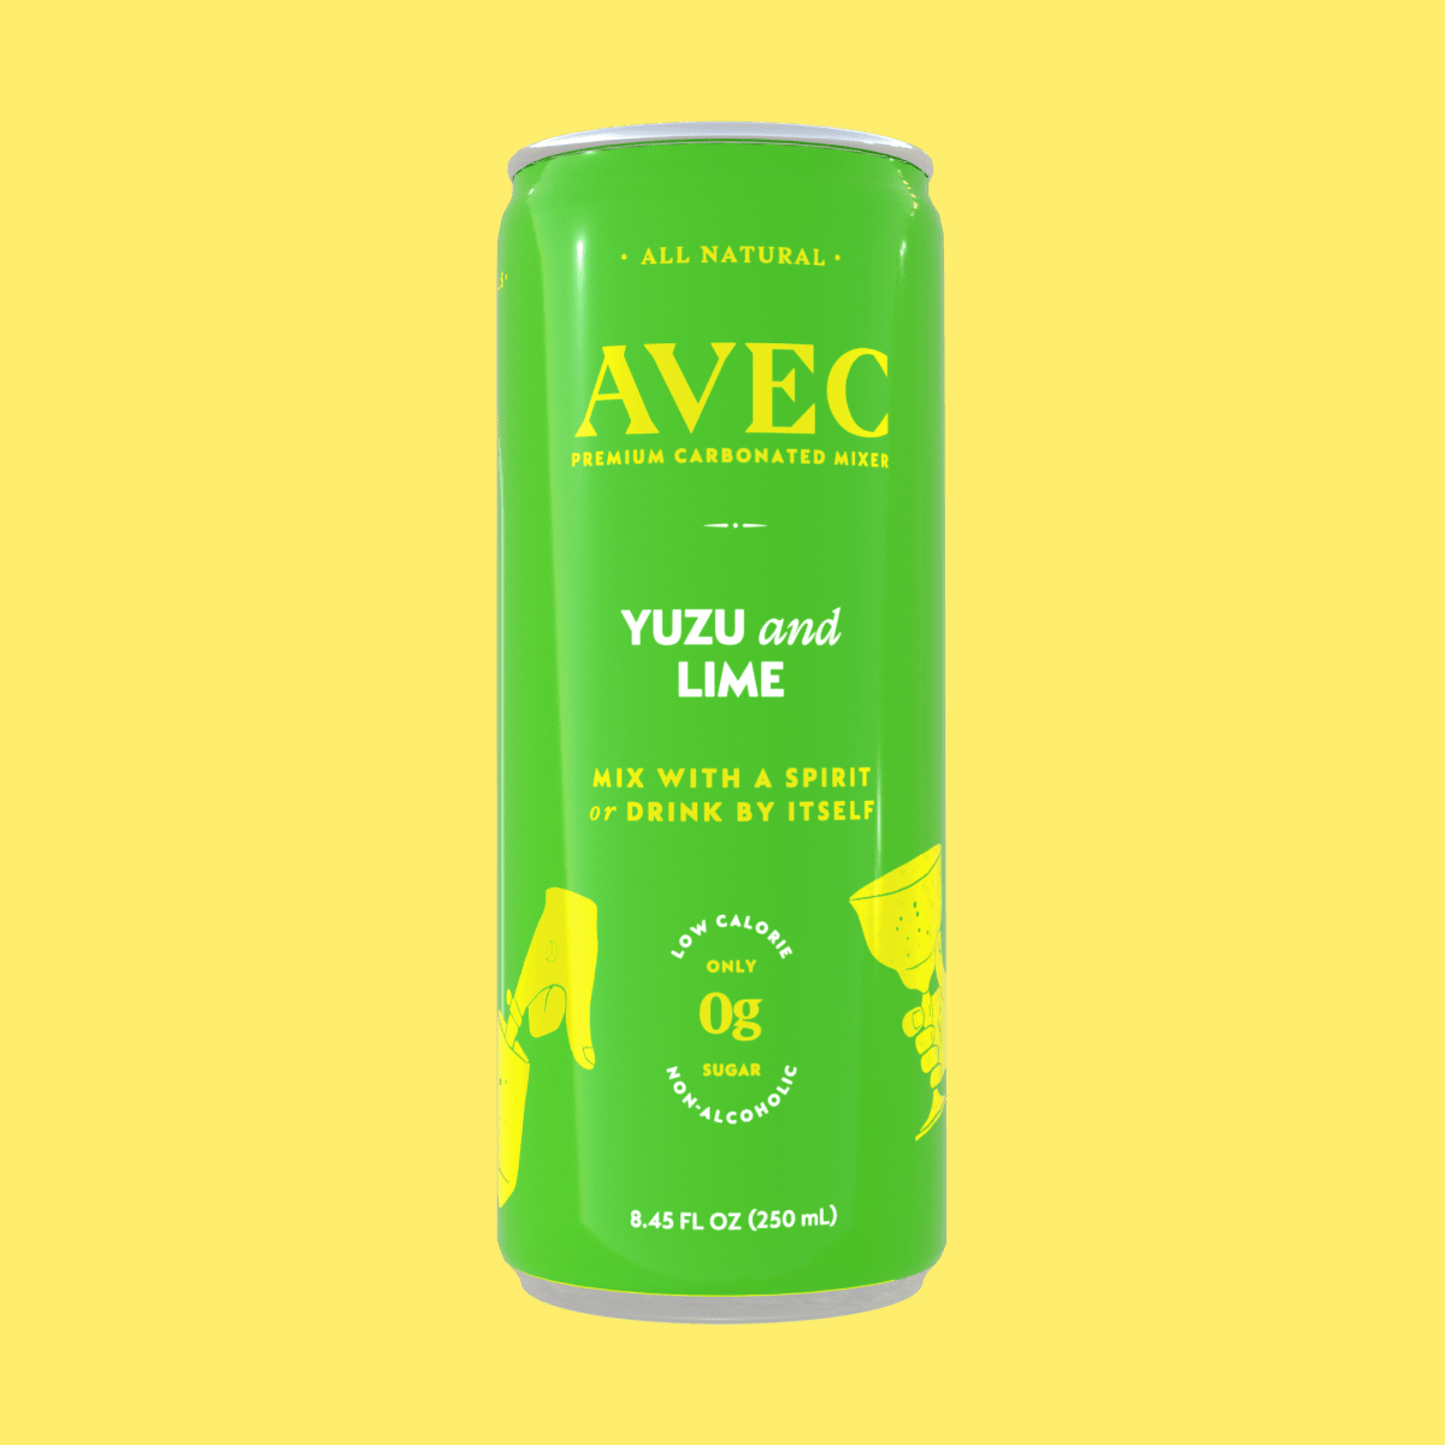 AVEC - The Sampler - 12-Pack (2 cans each flavor)